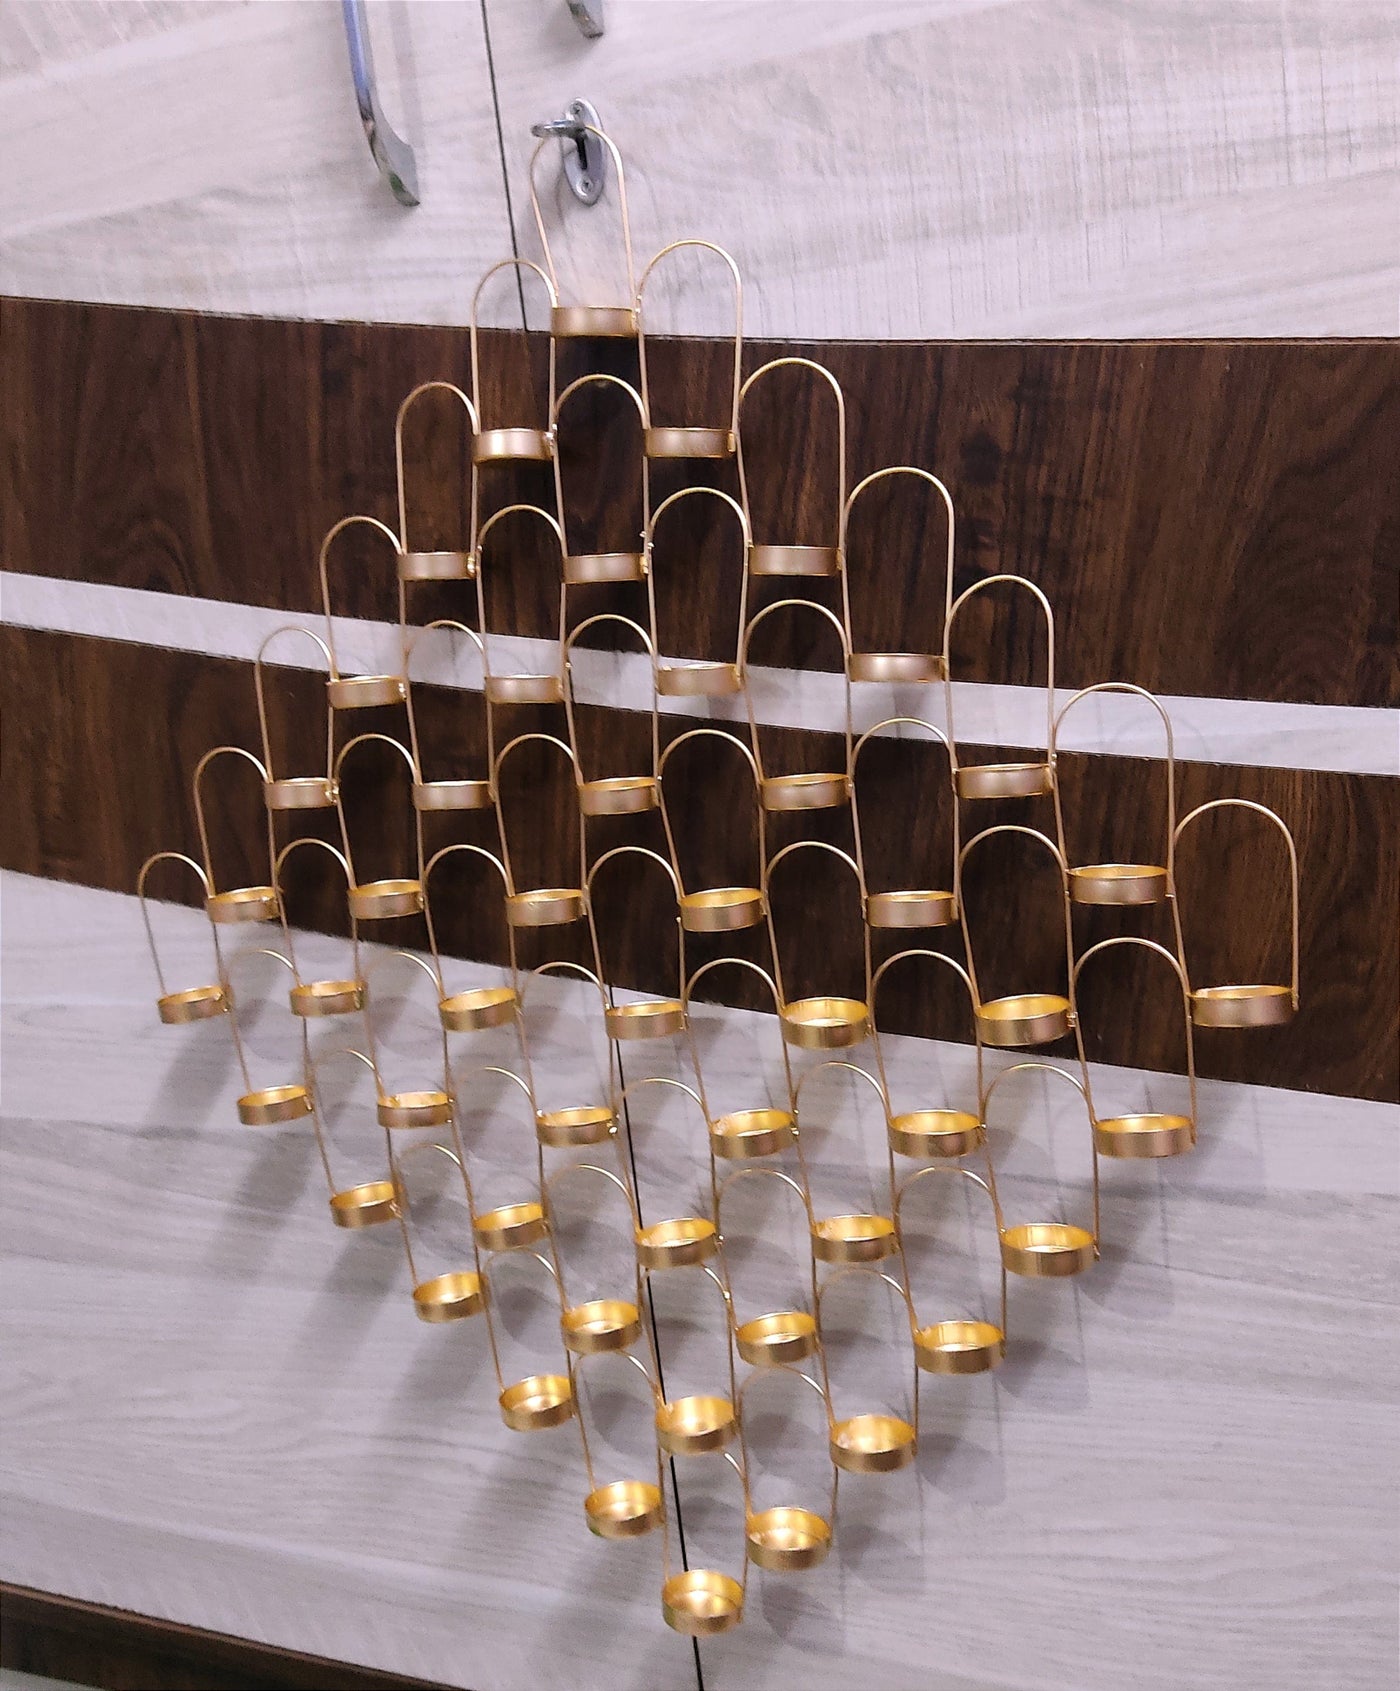 LAMANSH diya stand LAMANSH® 22*20 inch Diya Stand for Event Dancing 💃 Props Usage & Festival , Diwali Decoration / Golden Metal Diya Candle Holder for Bride & Groom entry (video attached)